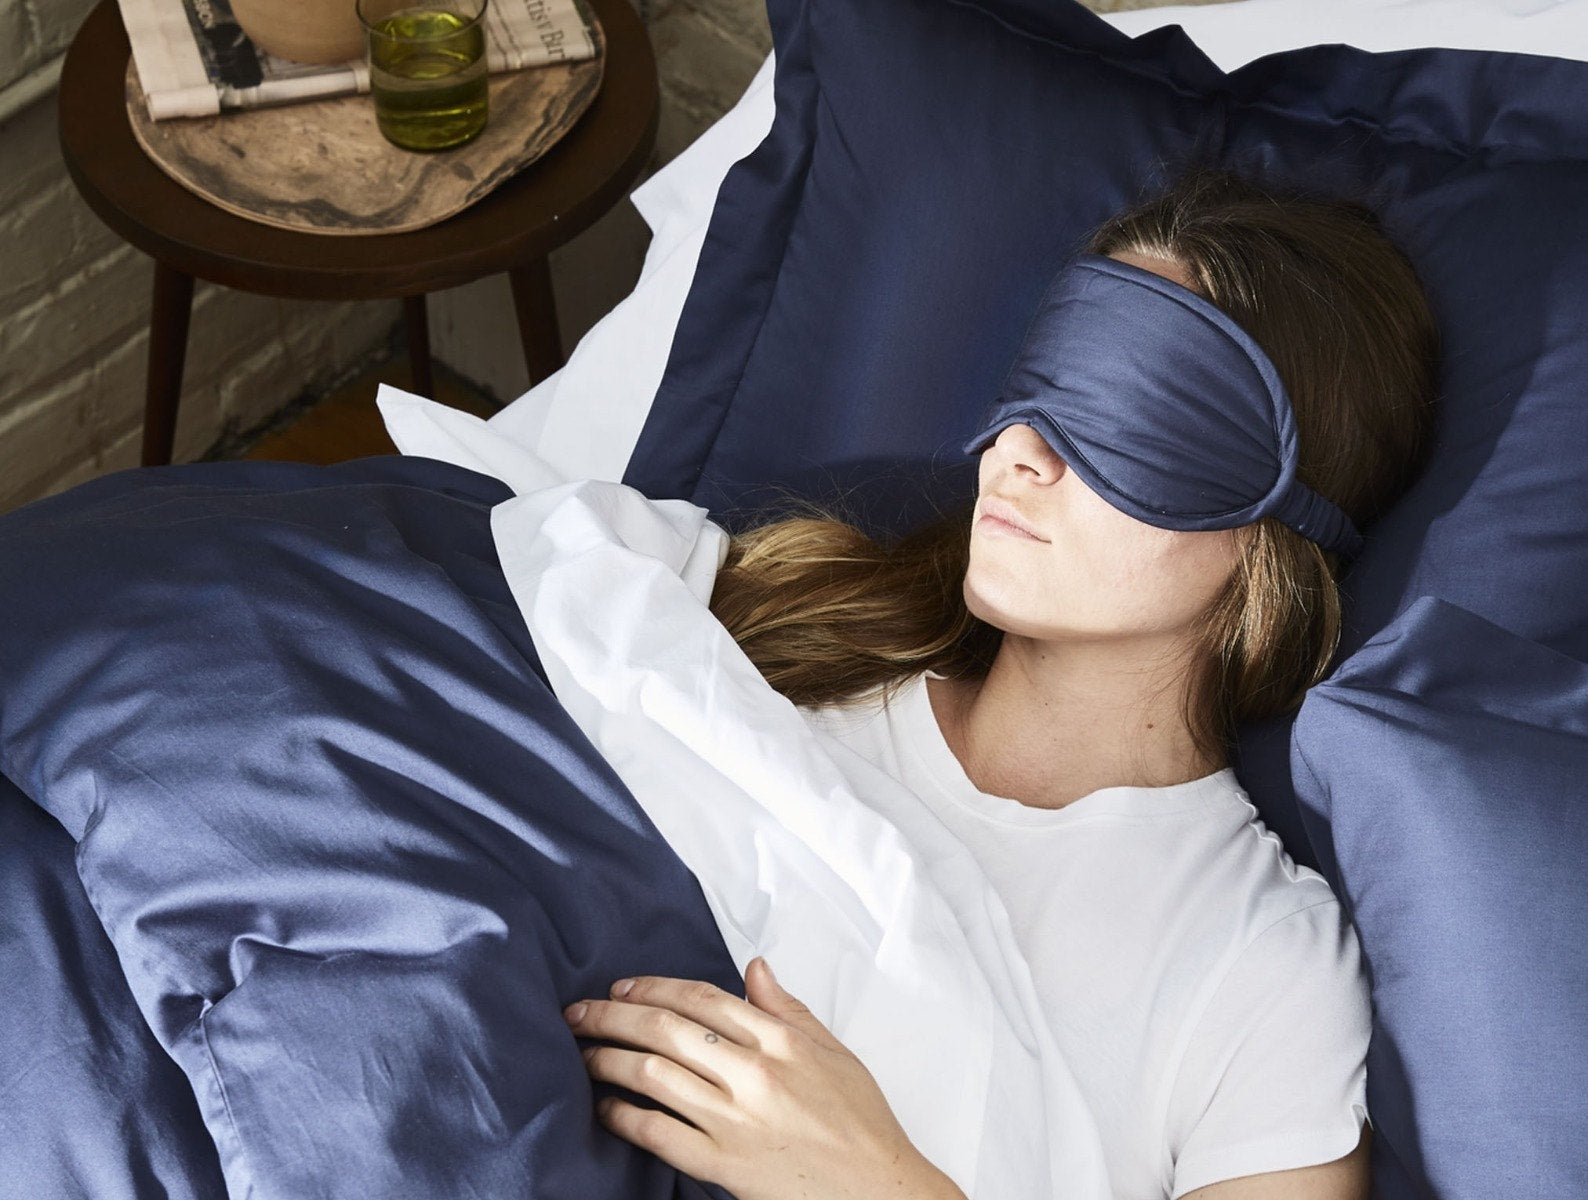 Silk Eye Mask: 'Let Me Sleep' Sleeping Eye Mask – Moonlit Skincare